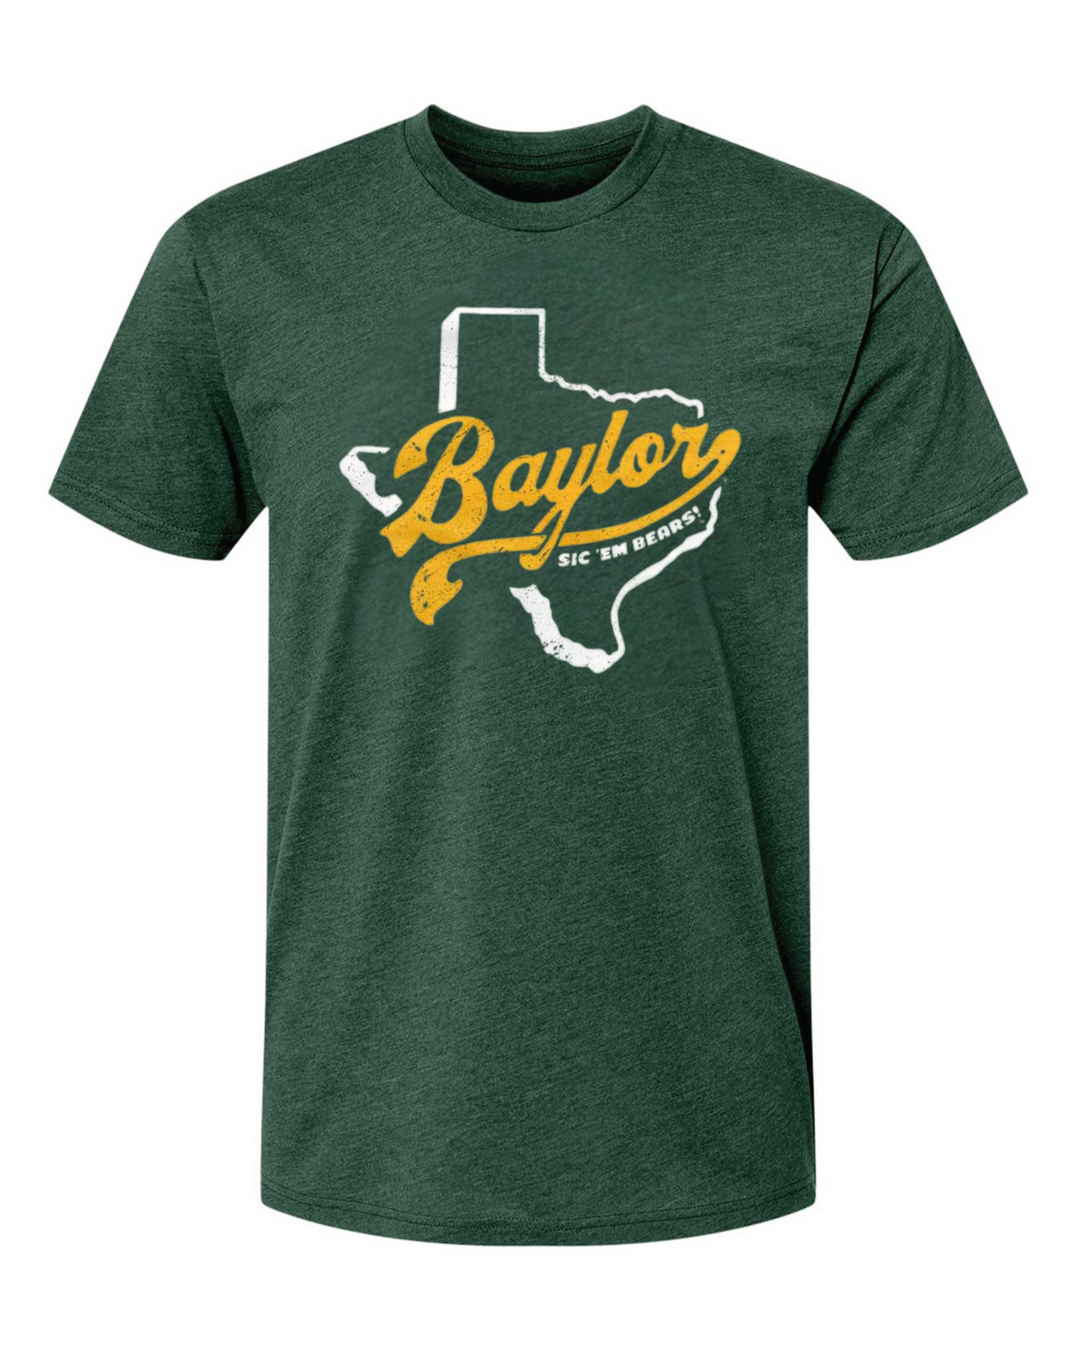 Baylor Shirt BU Bears Baylor University T-shirt Heather Green Tee Mock Up